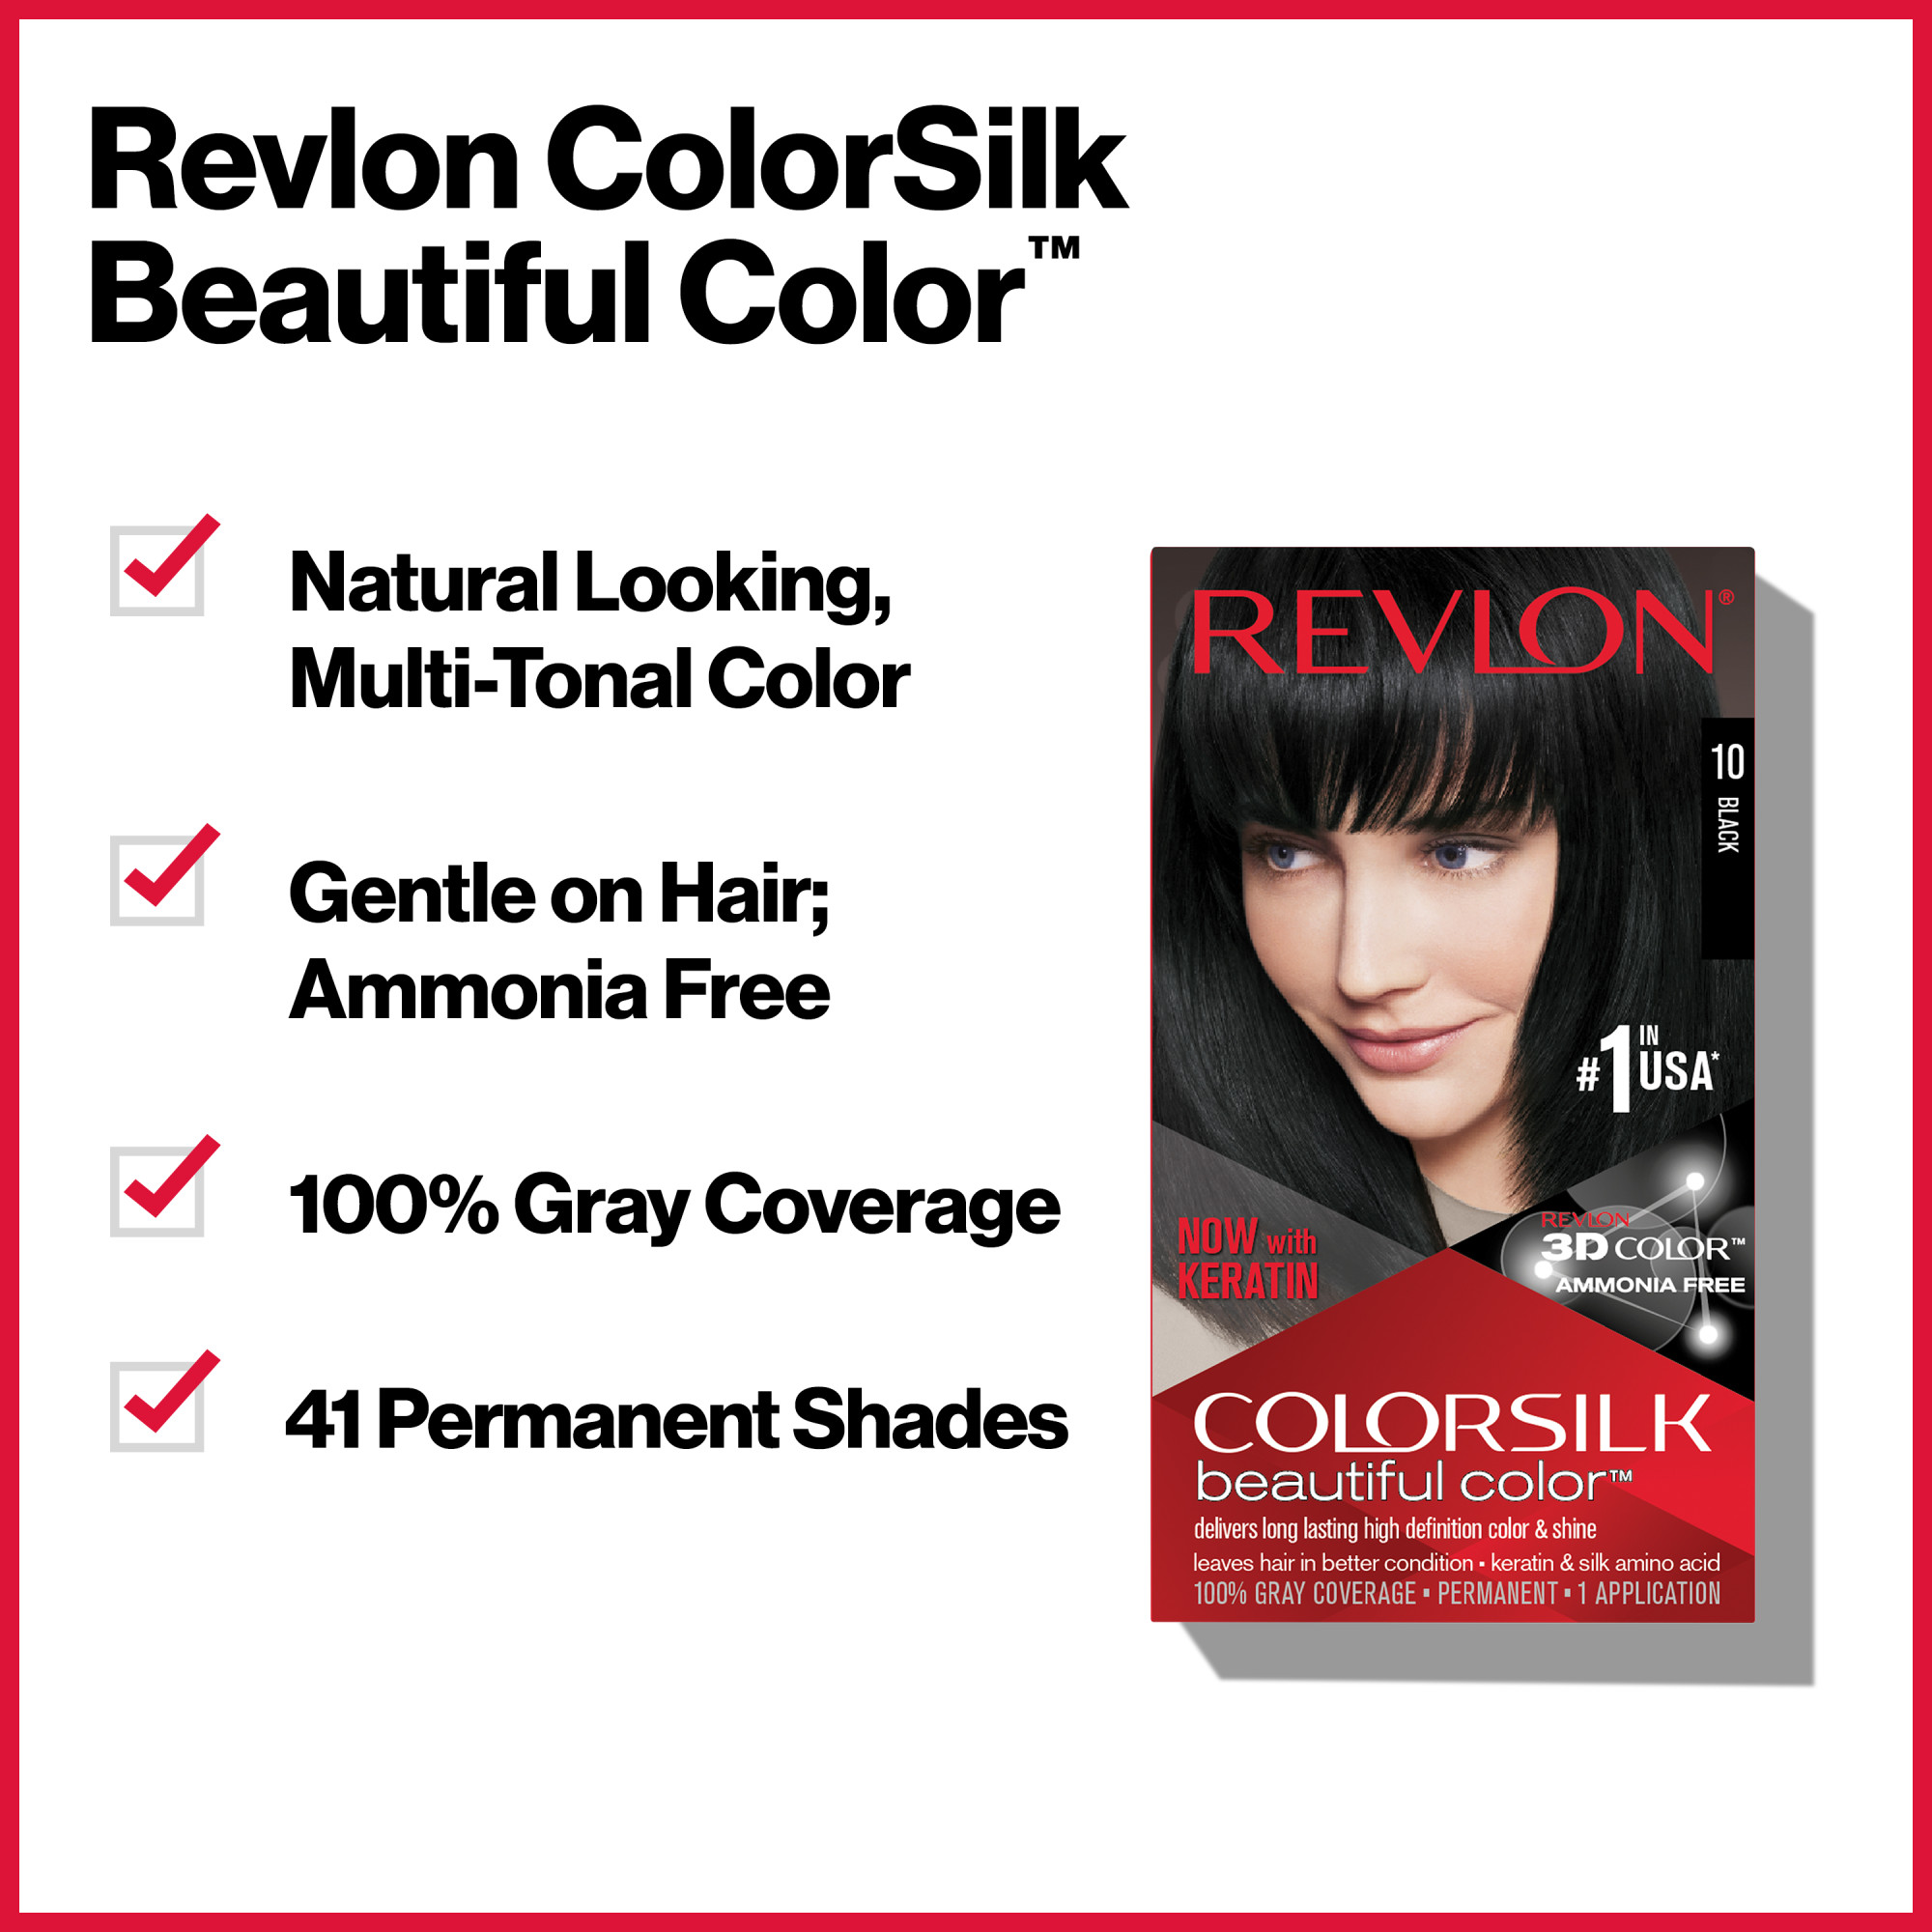 Revlon ColorSilk Beautiful Color Hair Color - Light Golden Brown - image 5 of 14